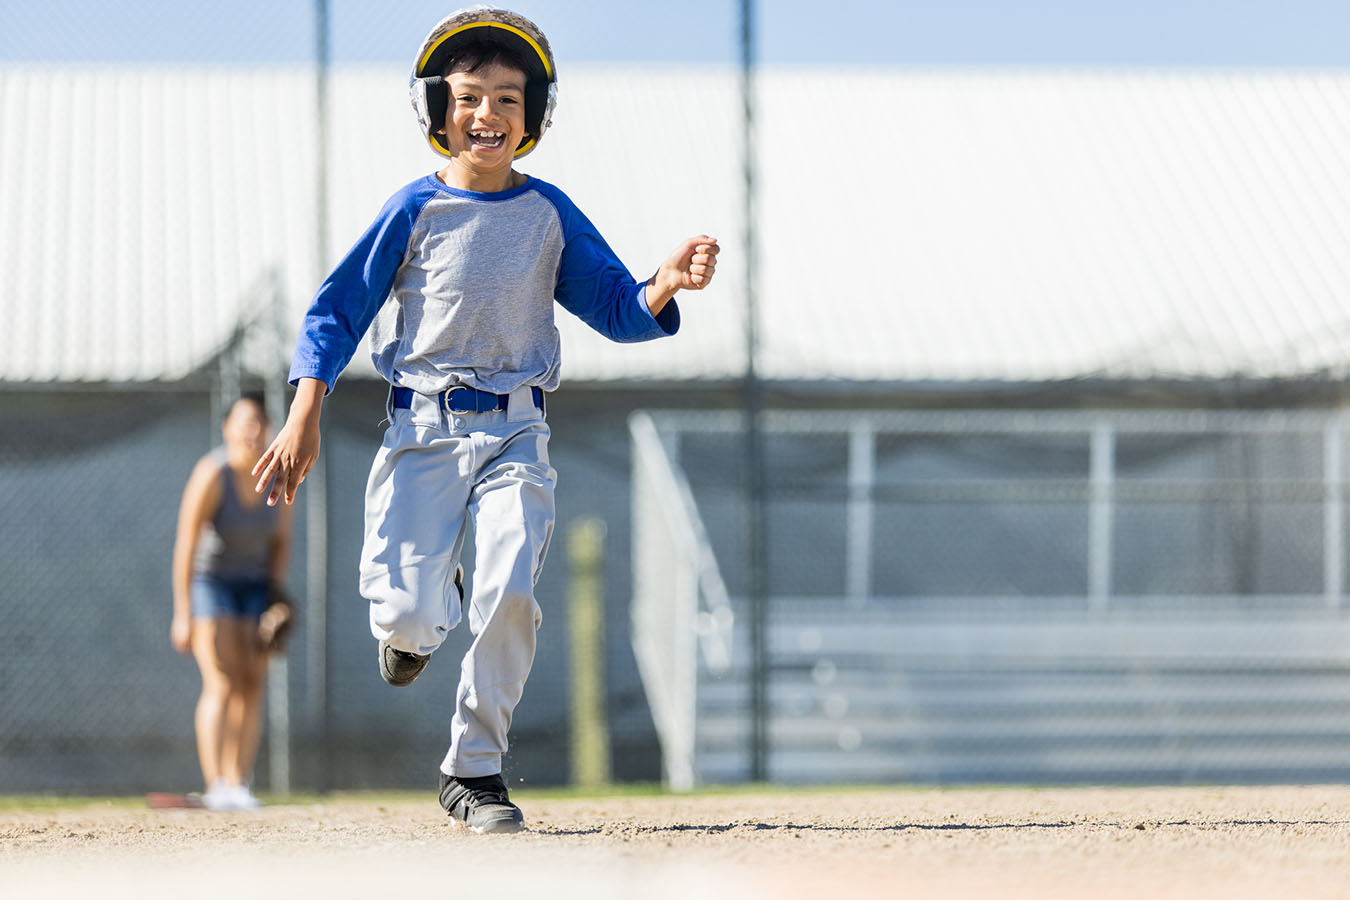 A boy runs the bases during a baseball game.